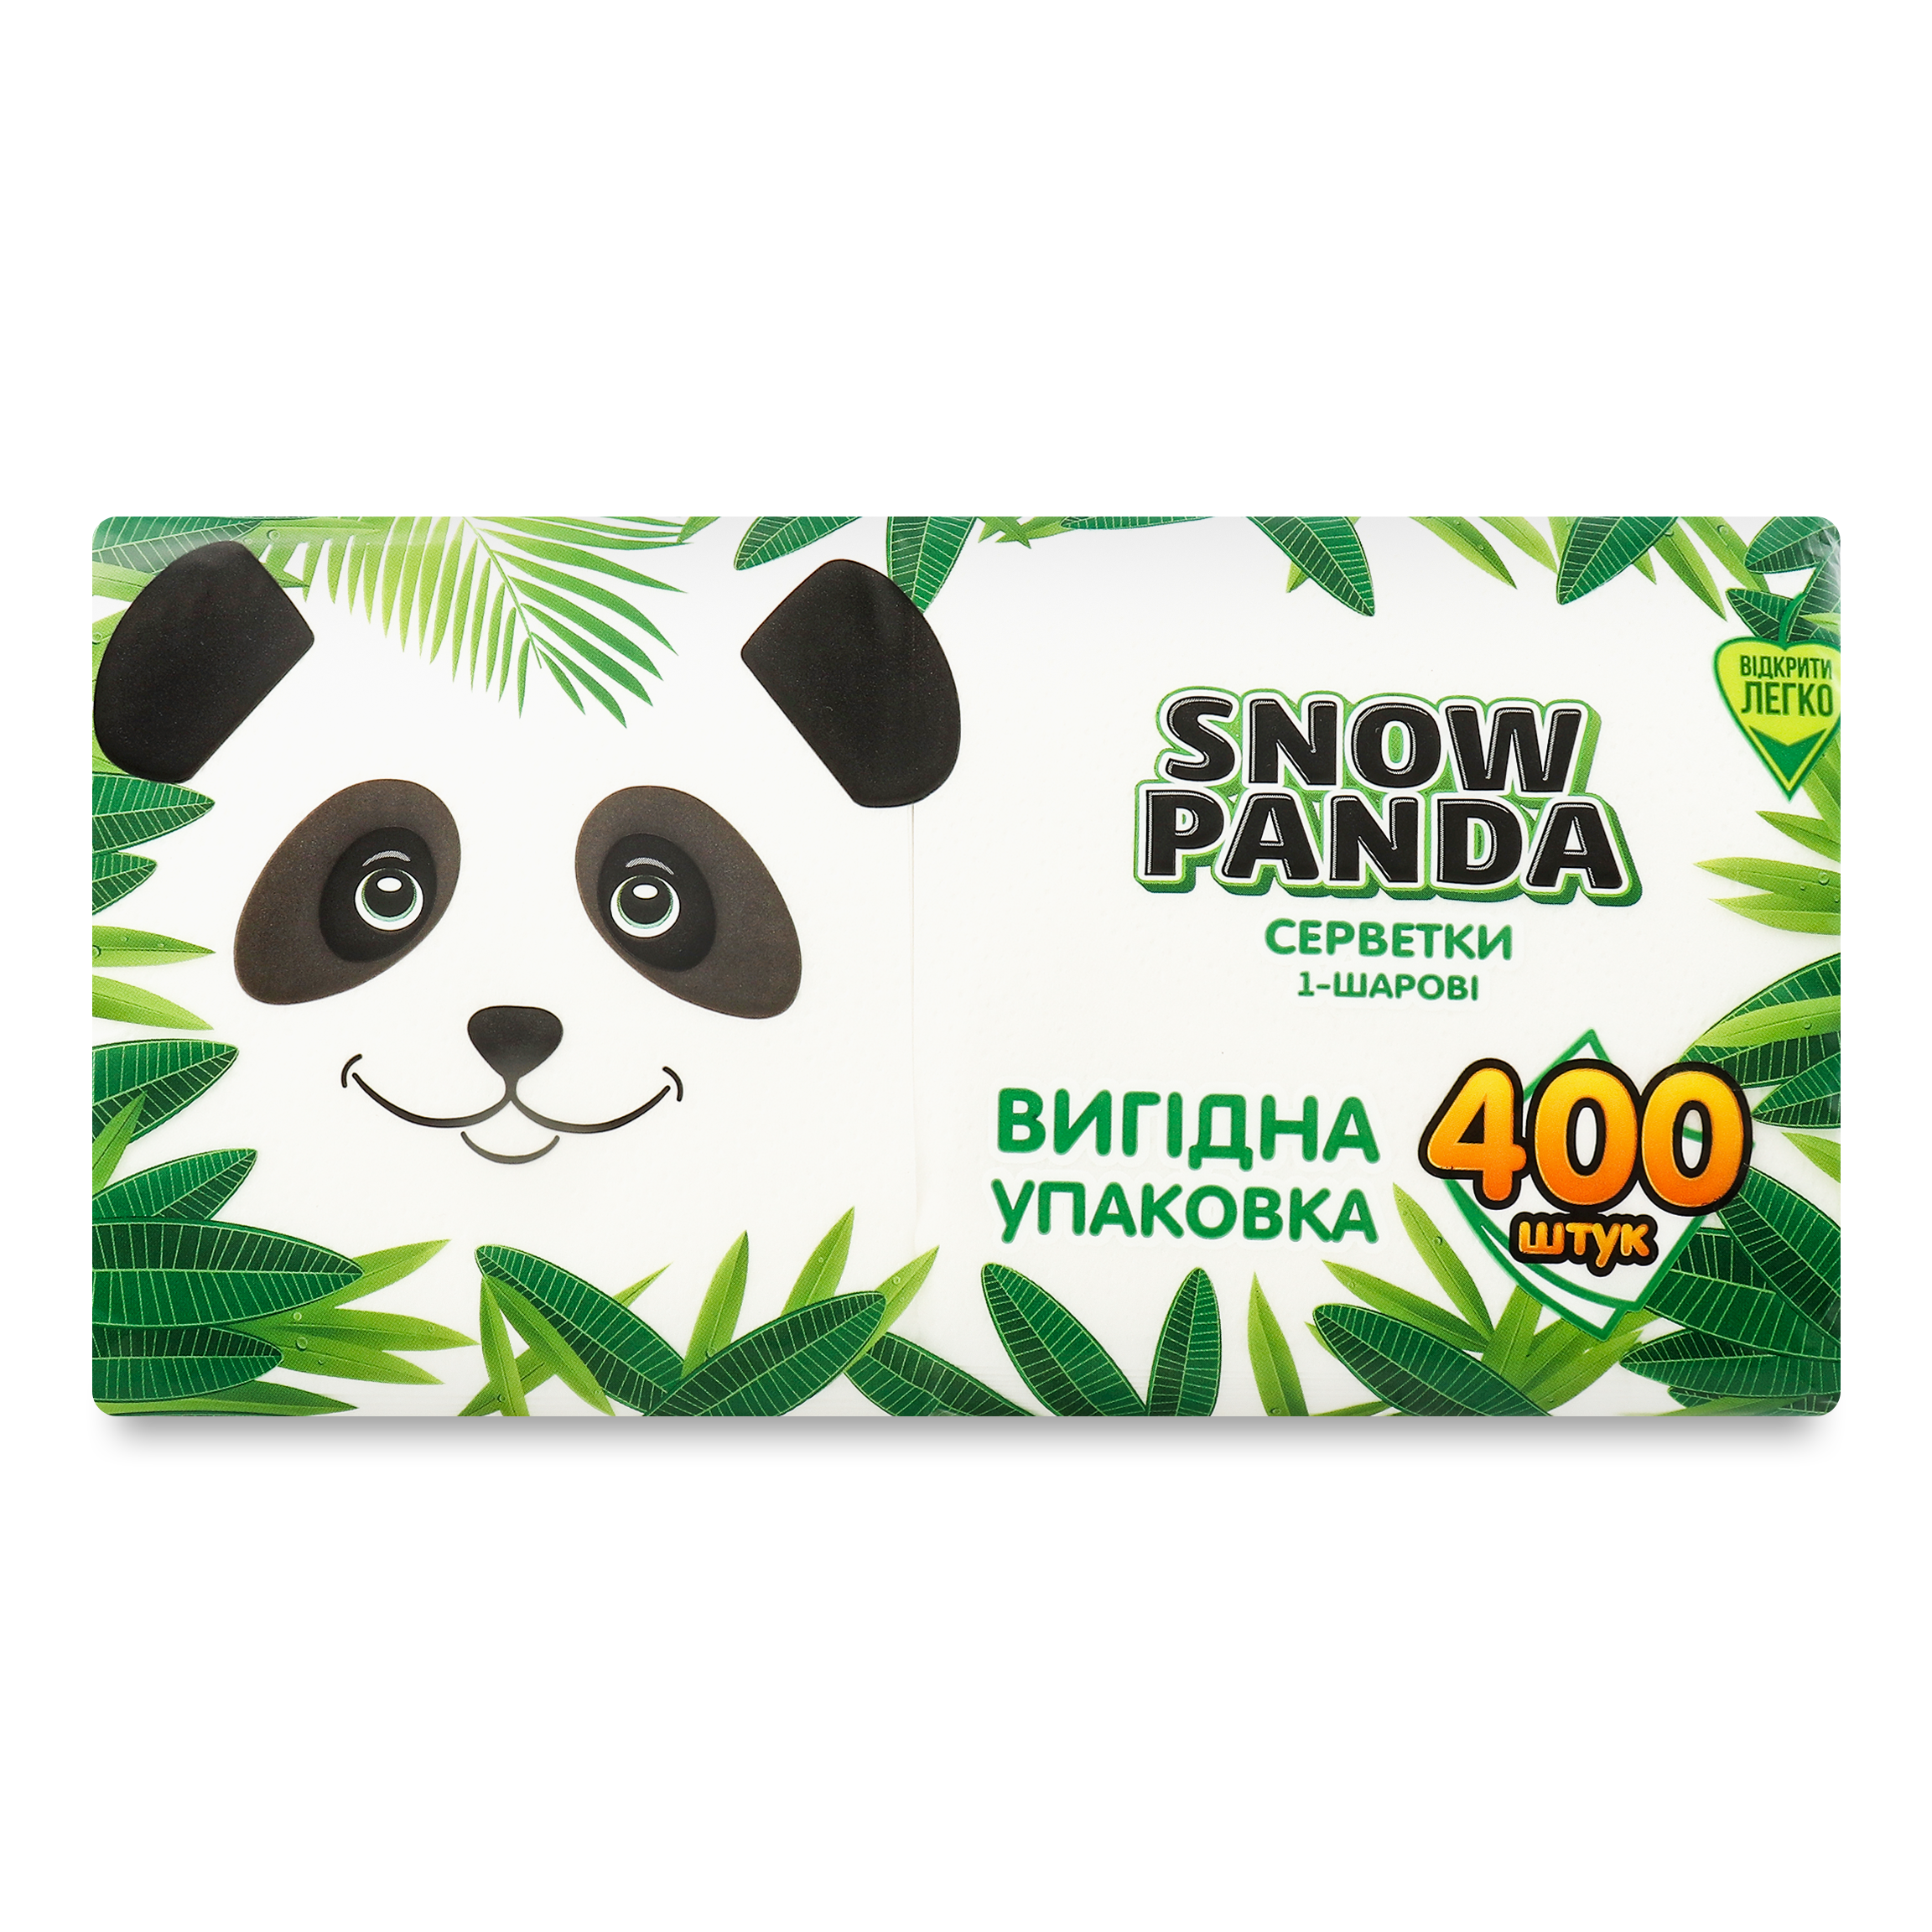 Snow Panda Single Layer Napkins 24х24cm 400pcs
 2